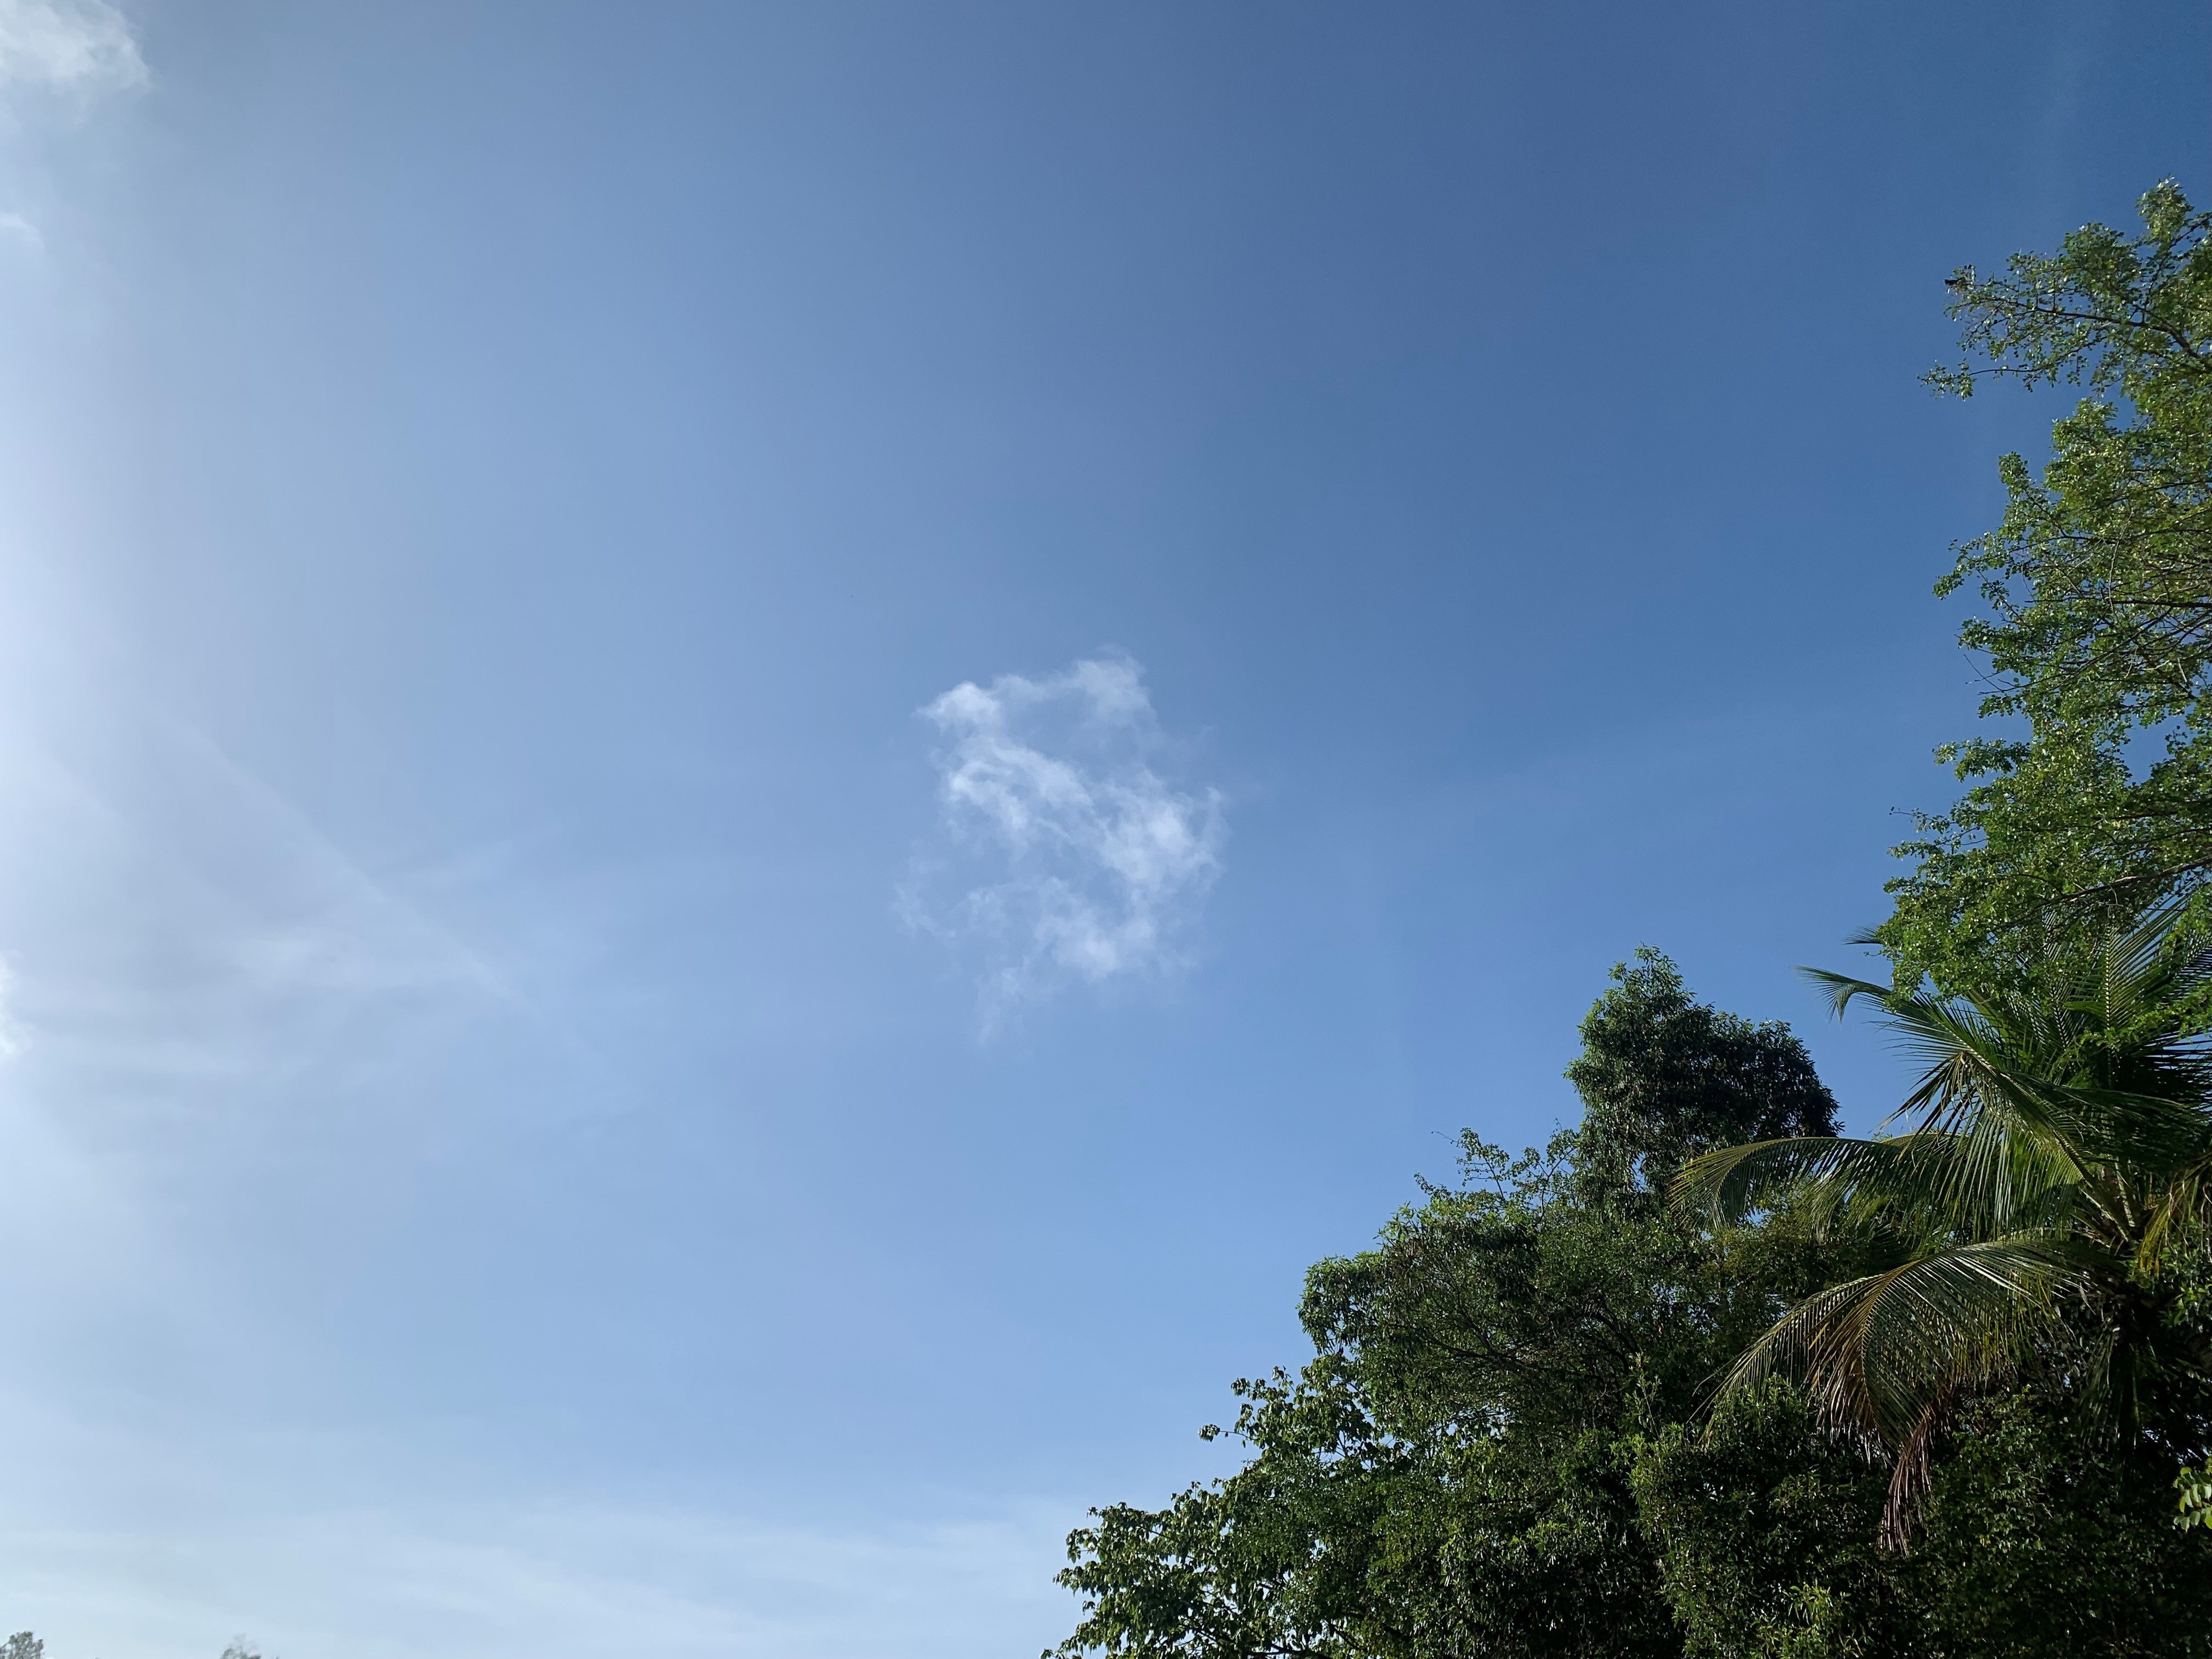     Fin de la pollution de l’air en Guadeloupe

